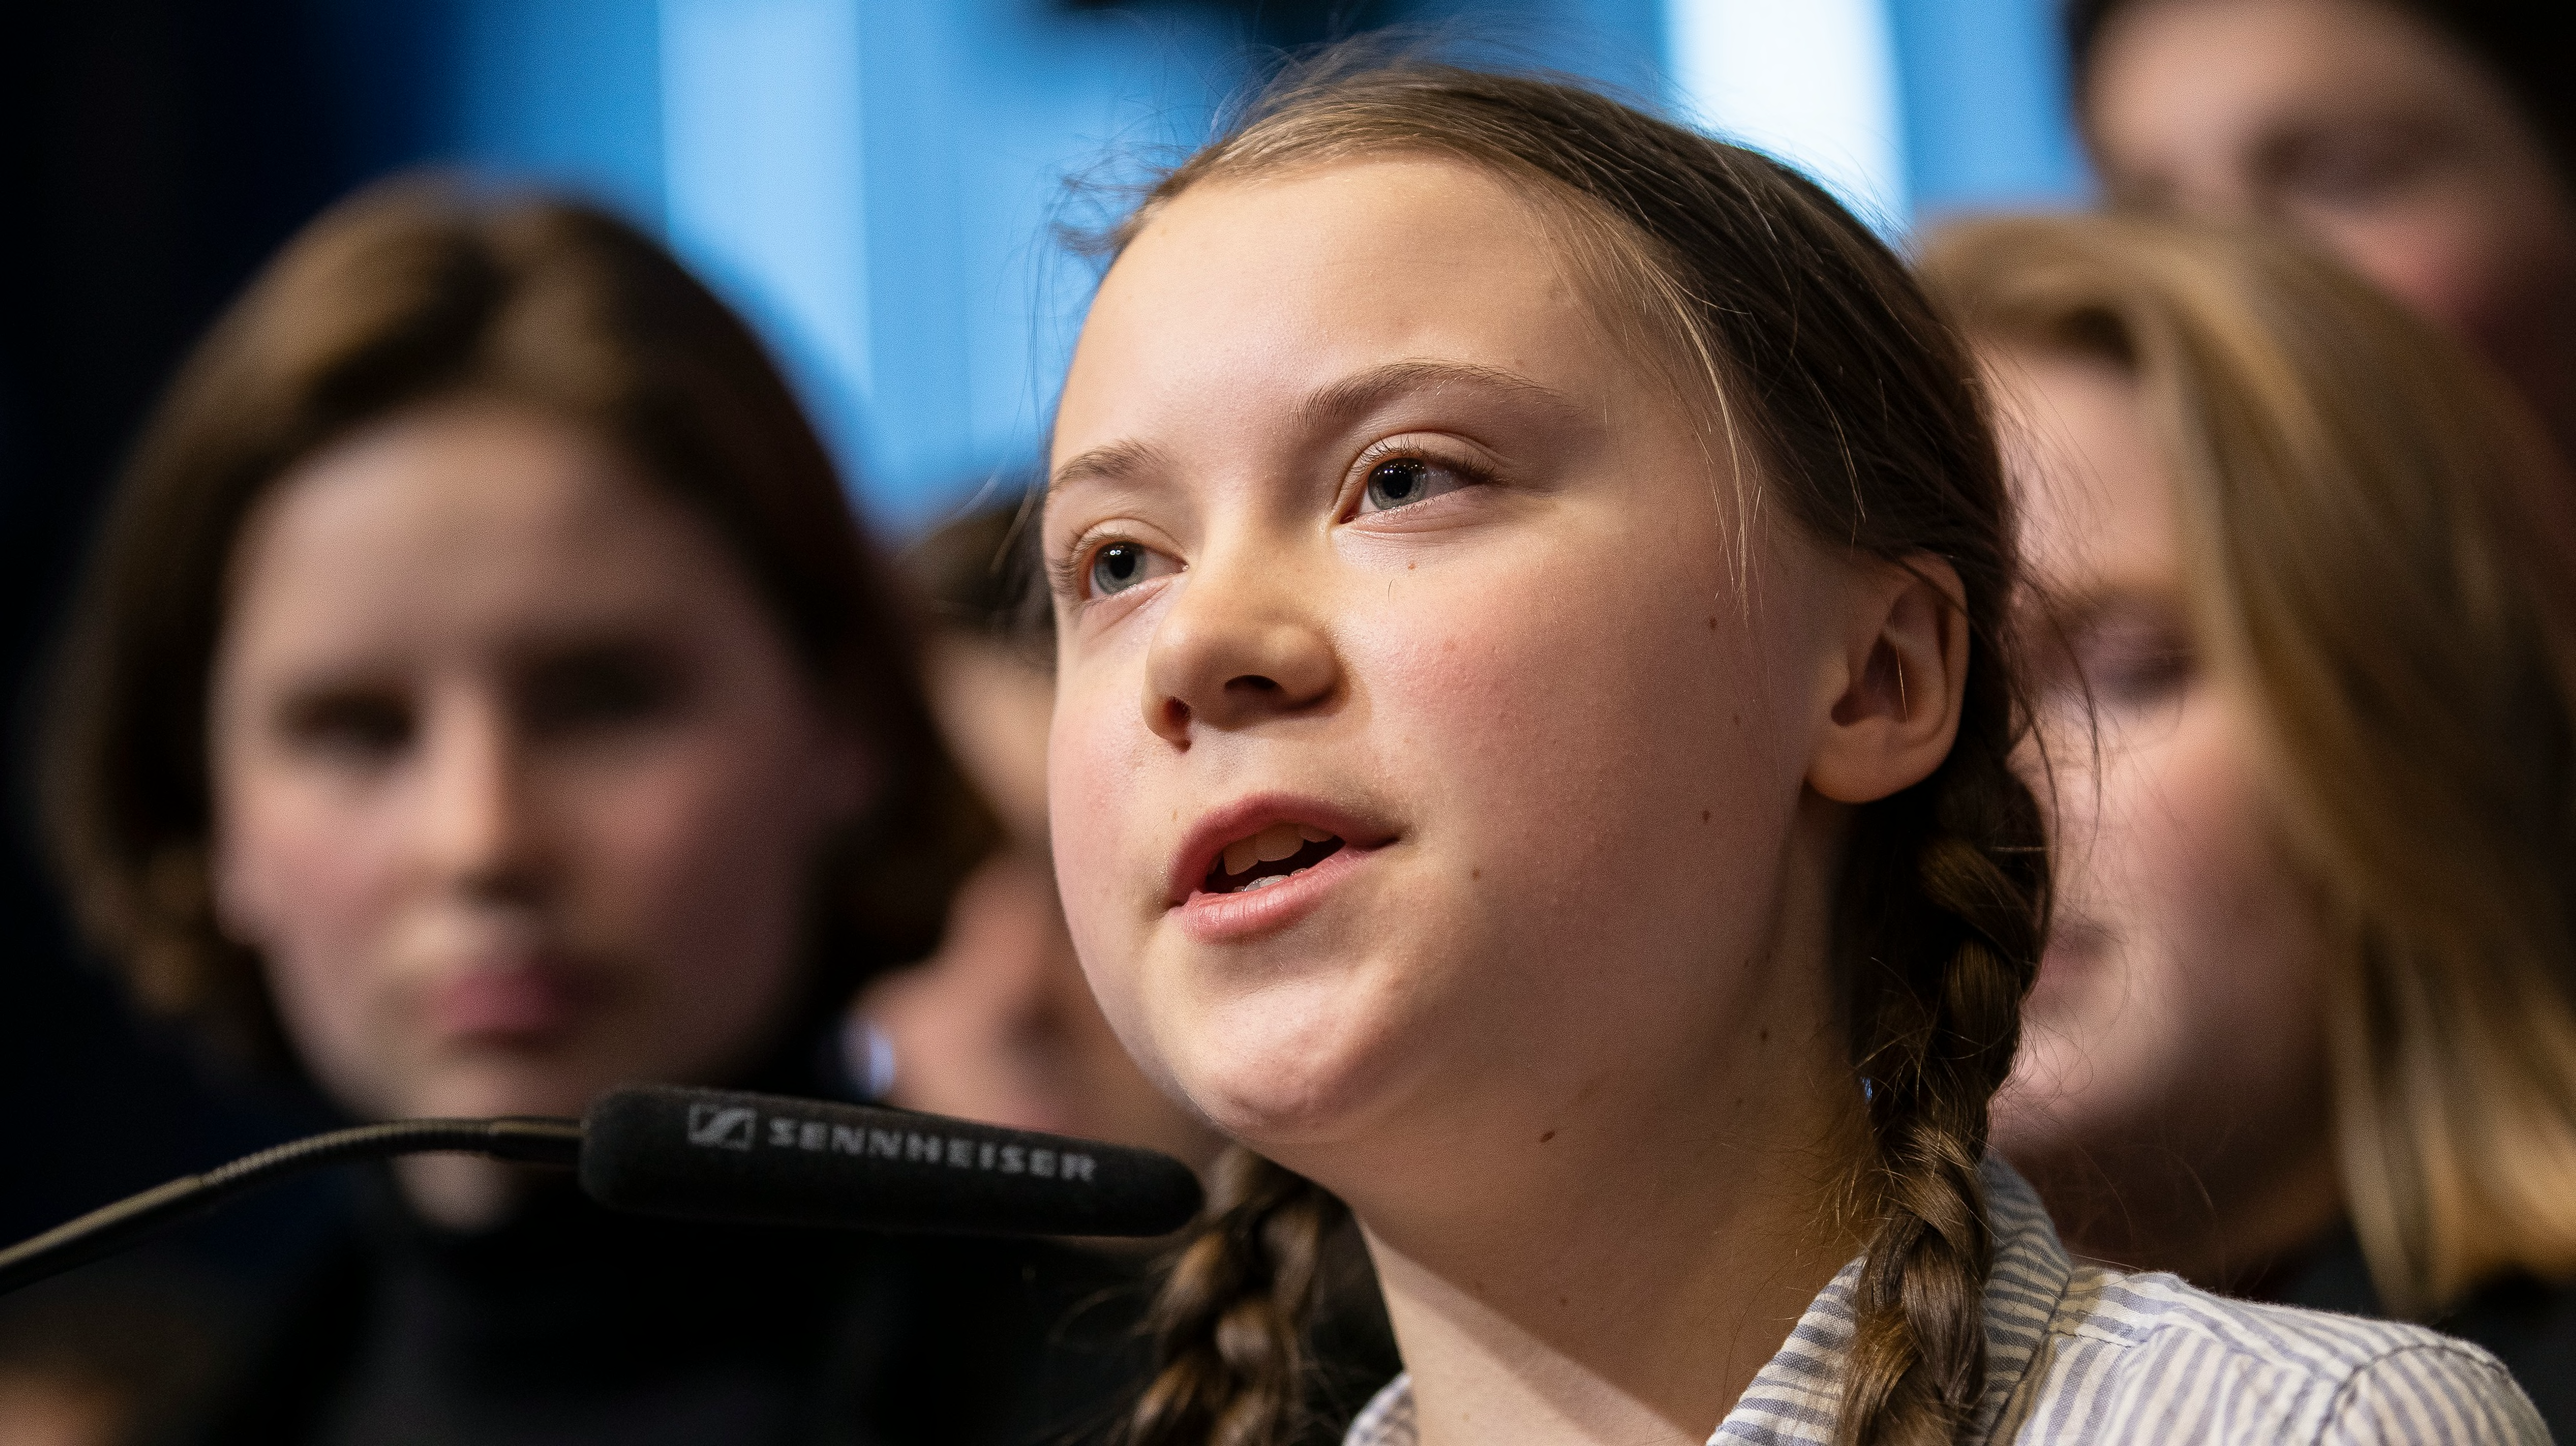 Greta Thunberg 16 Year Old Swedish Environmental Activist Has Been Nominated For The Nobel